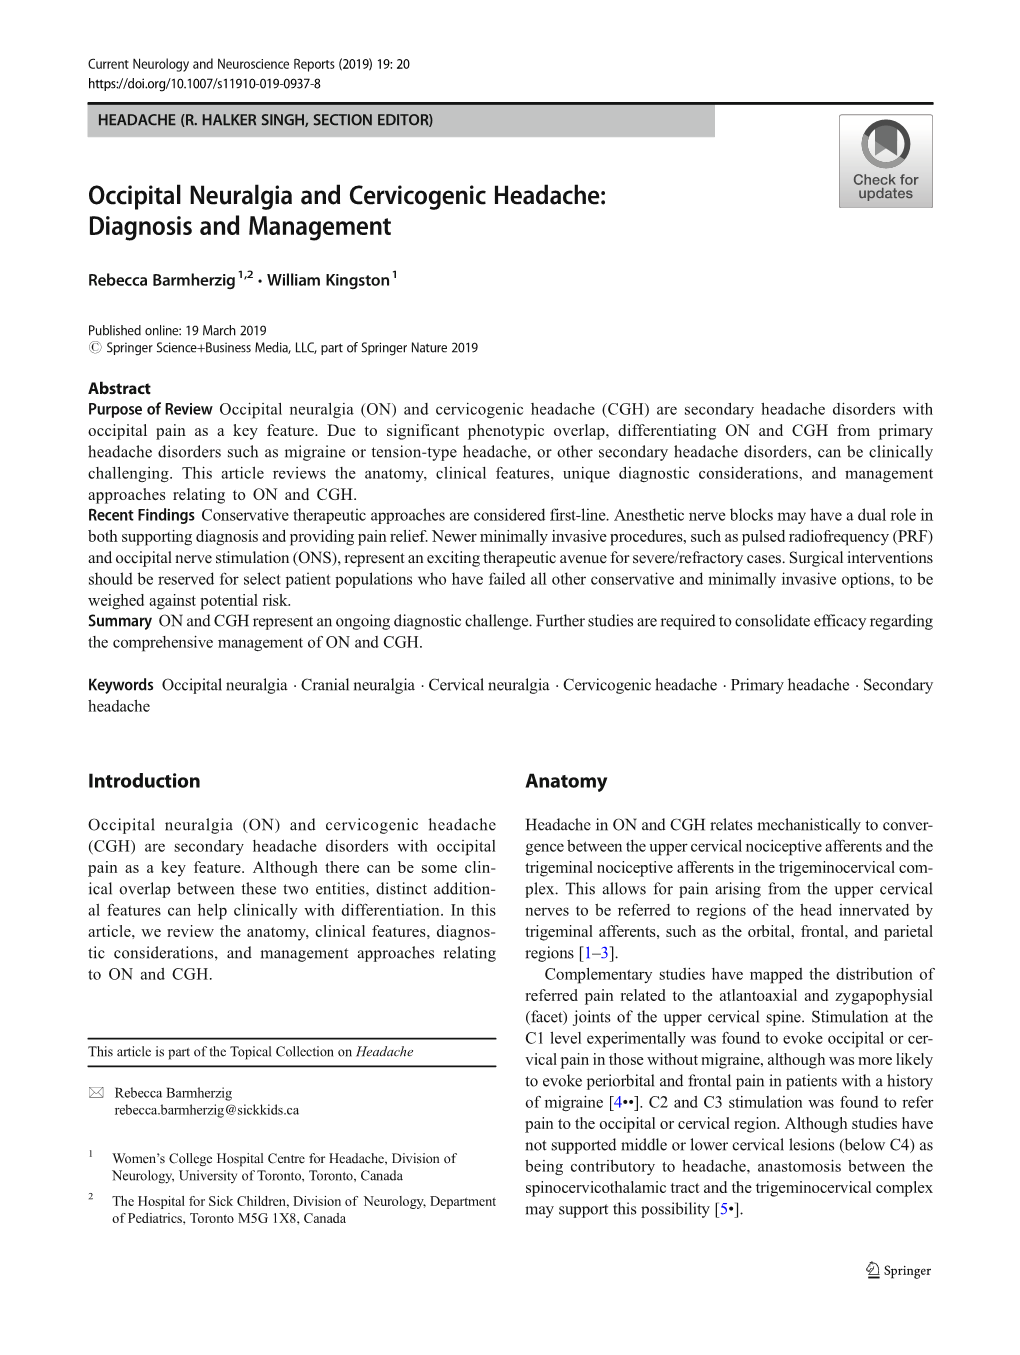 Occipital Neuralgia and Cervicogenic Headache: Diagnosis and Management